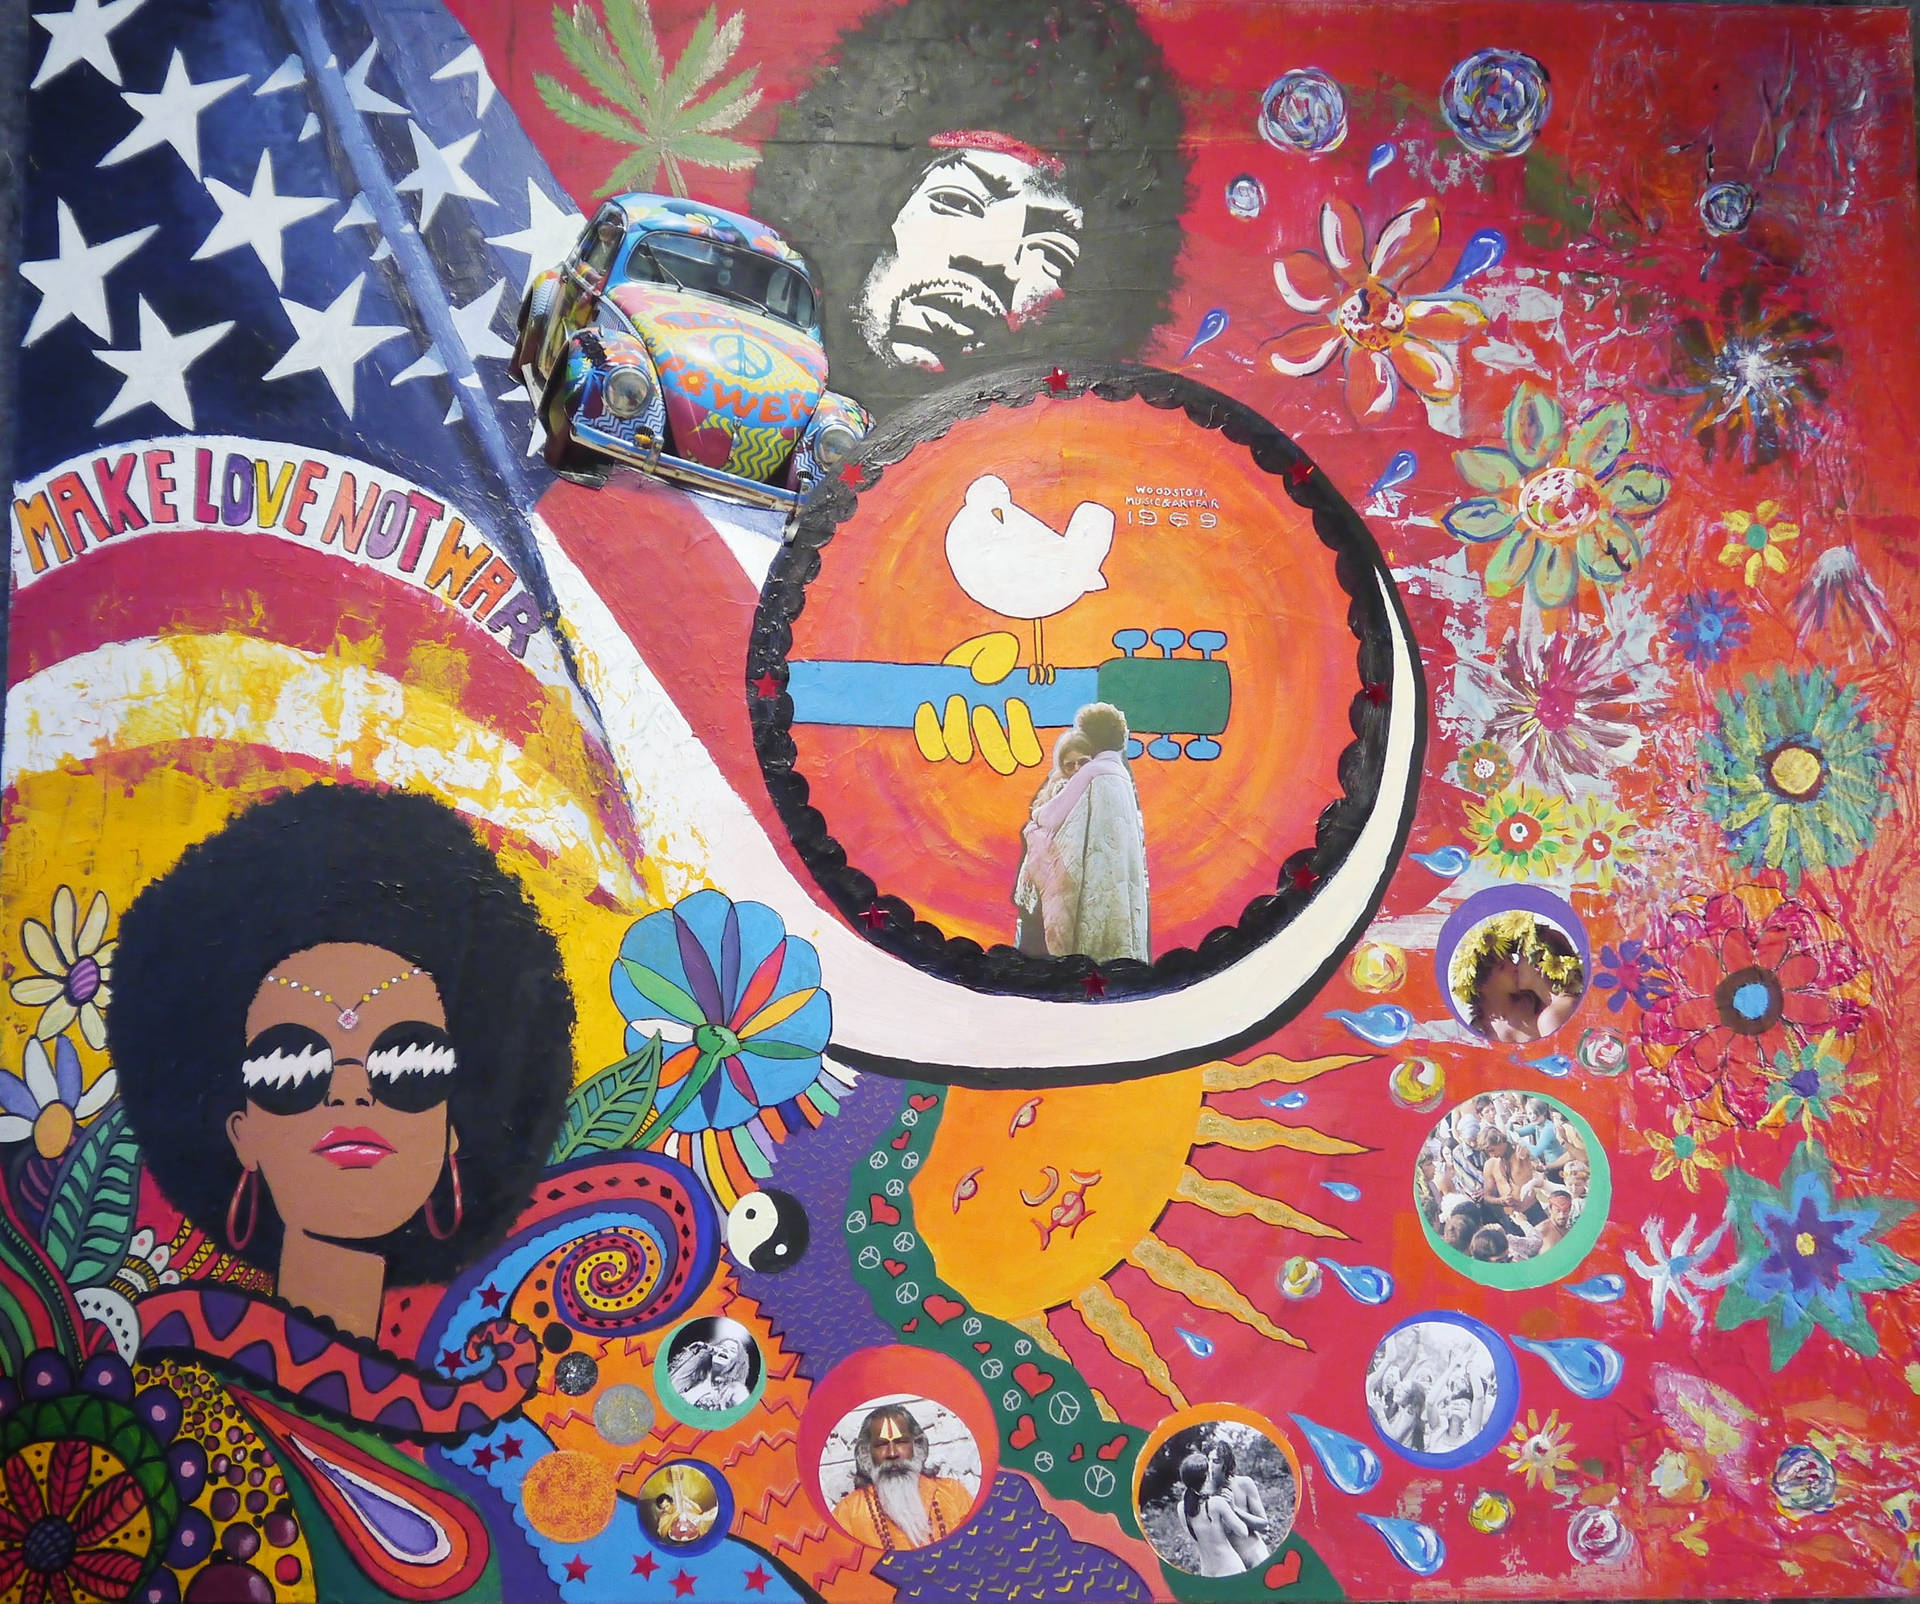 Woodstock Art Painting Background